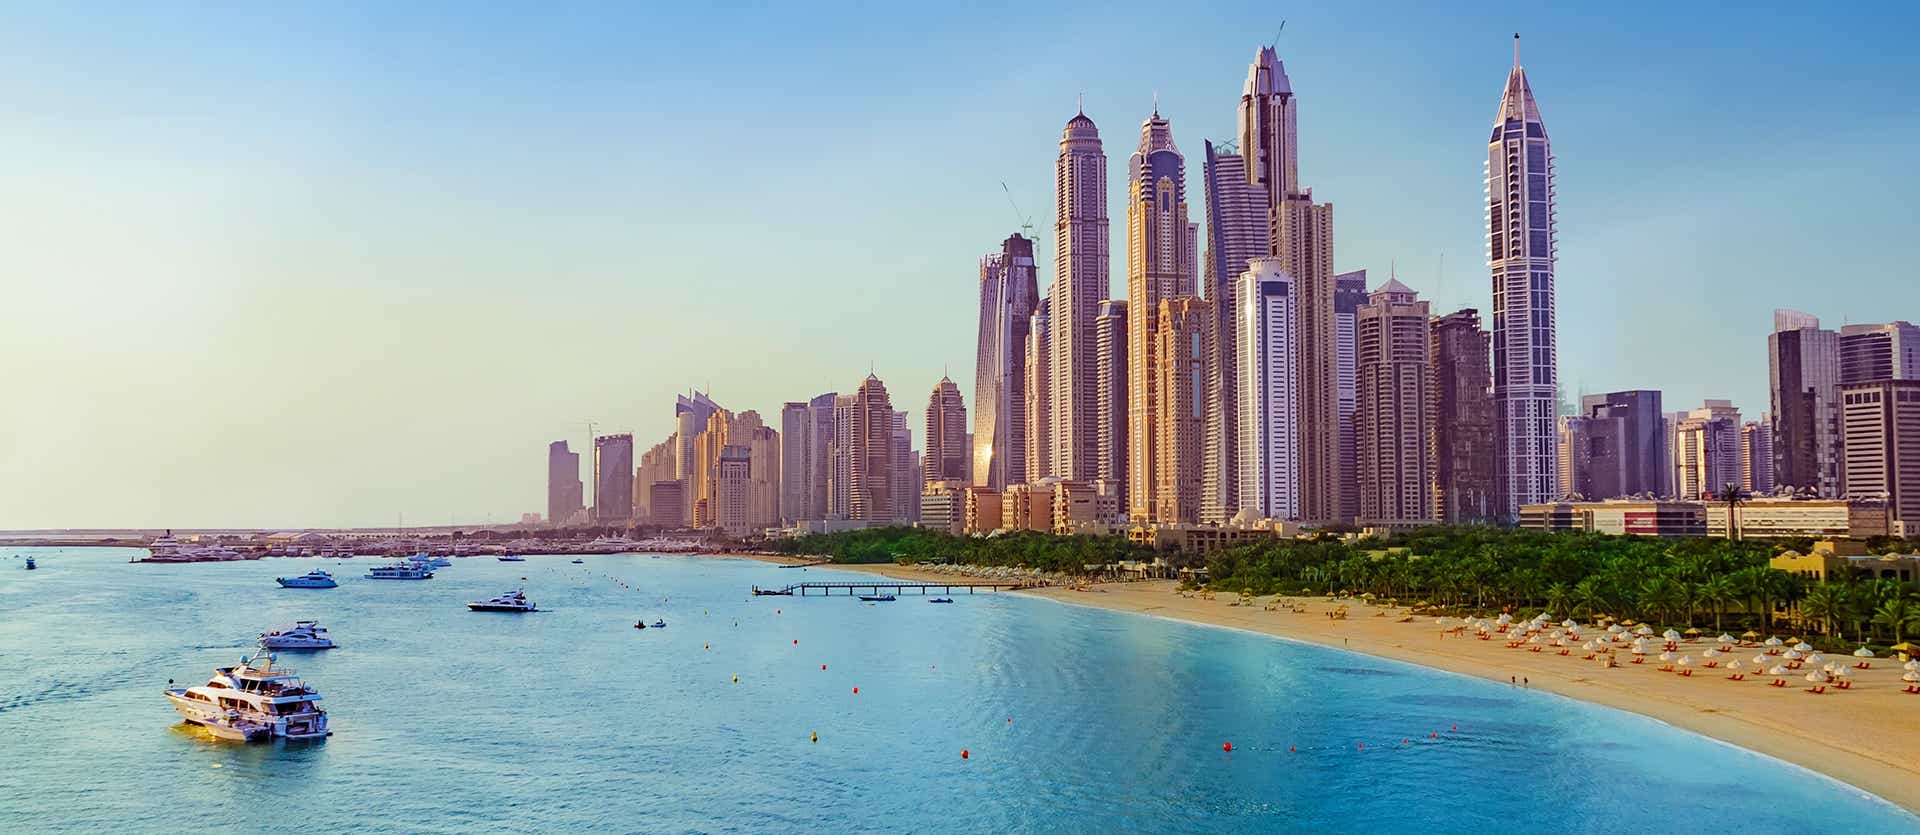 Skyscrapers <span class="iconos separador"></span> Dubai <span class="iconos separador"></span> United Arab Emirates